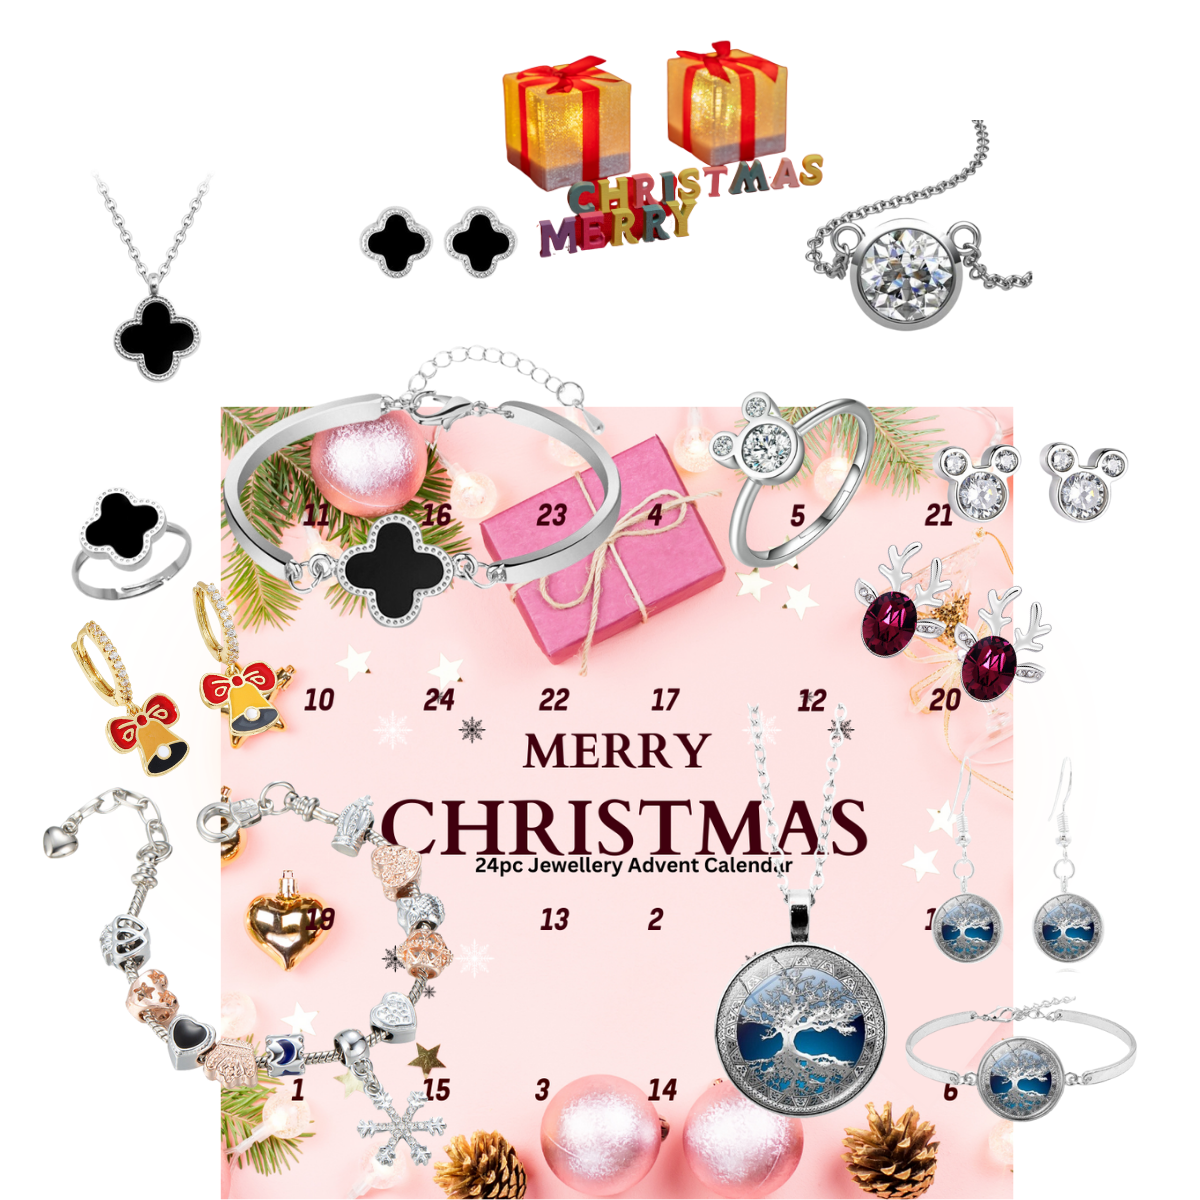 5 Boxes - Christmas Gift Set for Her Jewellery Advent Calendar Countdown-Bracelet, Pendant, Earrings and Rings - 24pcs/Box|GCJSET021-2|UK seller